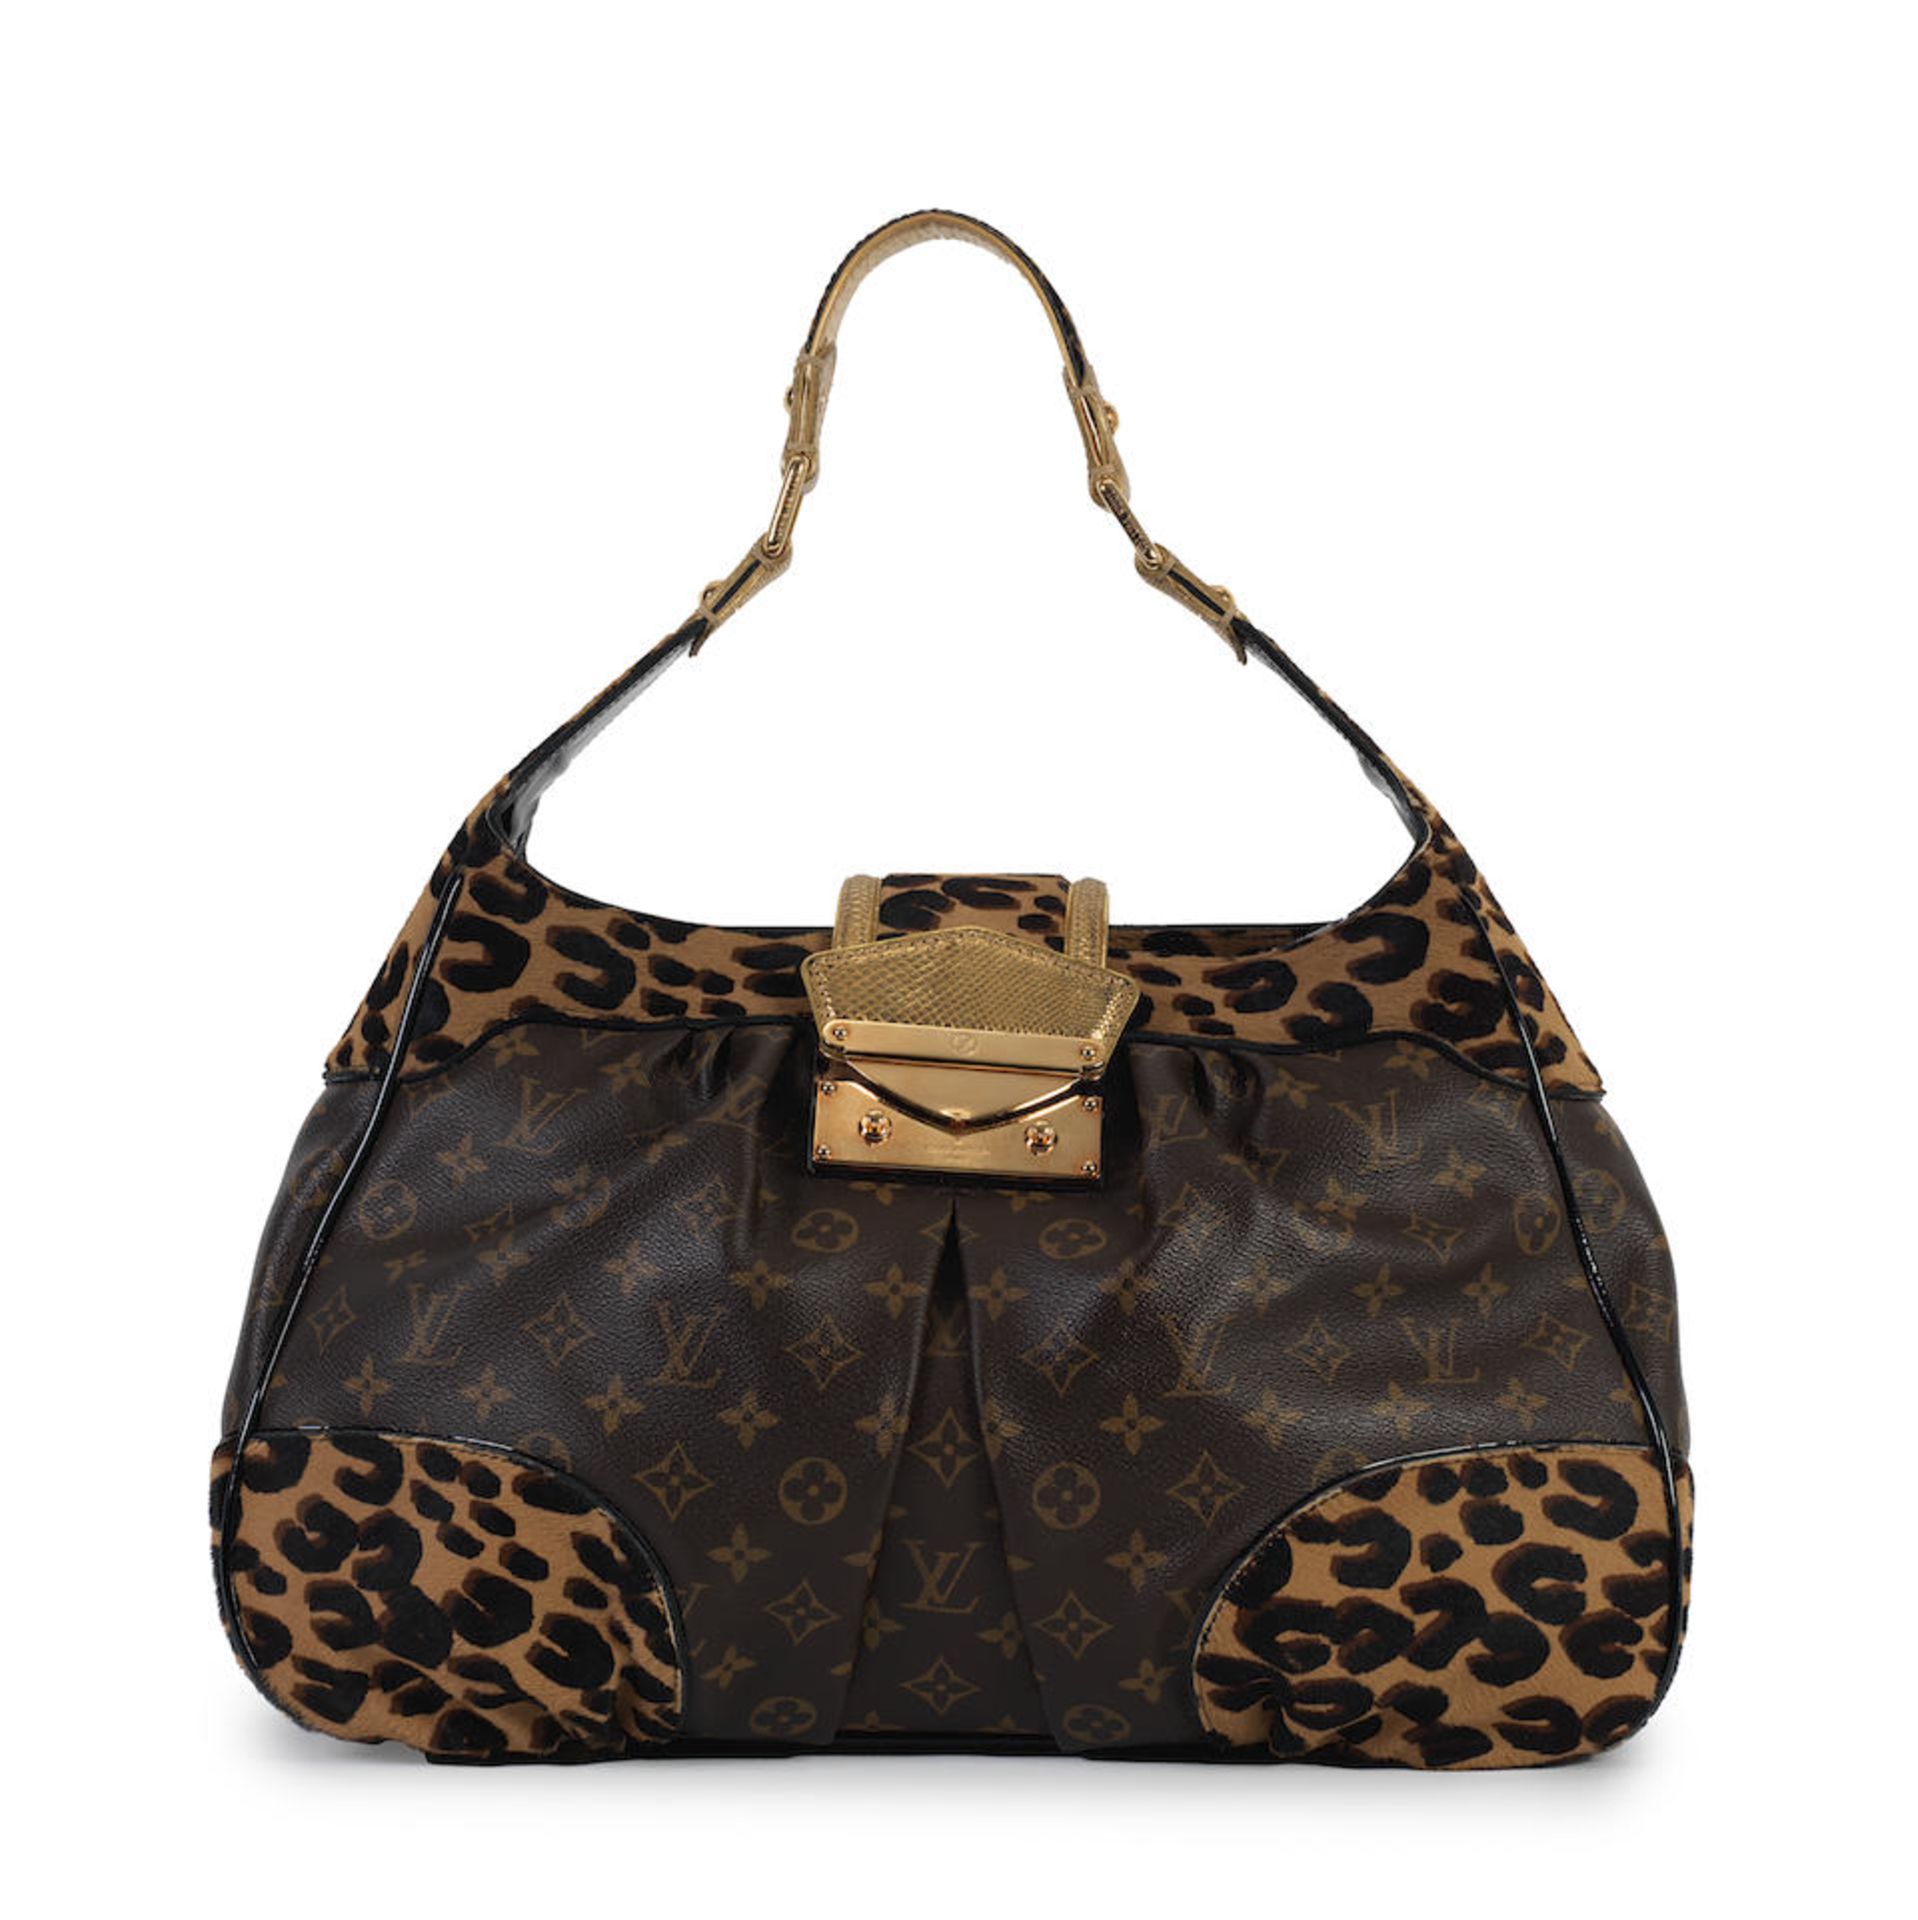 Louis Vuitton: a Leopard Polly Shoulder Bag 2006 (includes shoulder strap and dust bag)